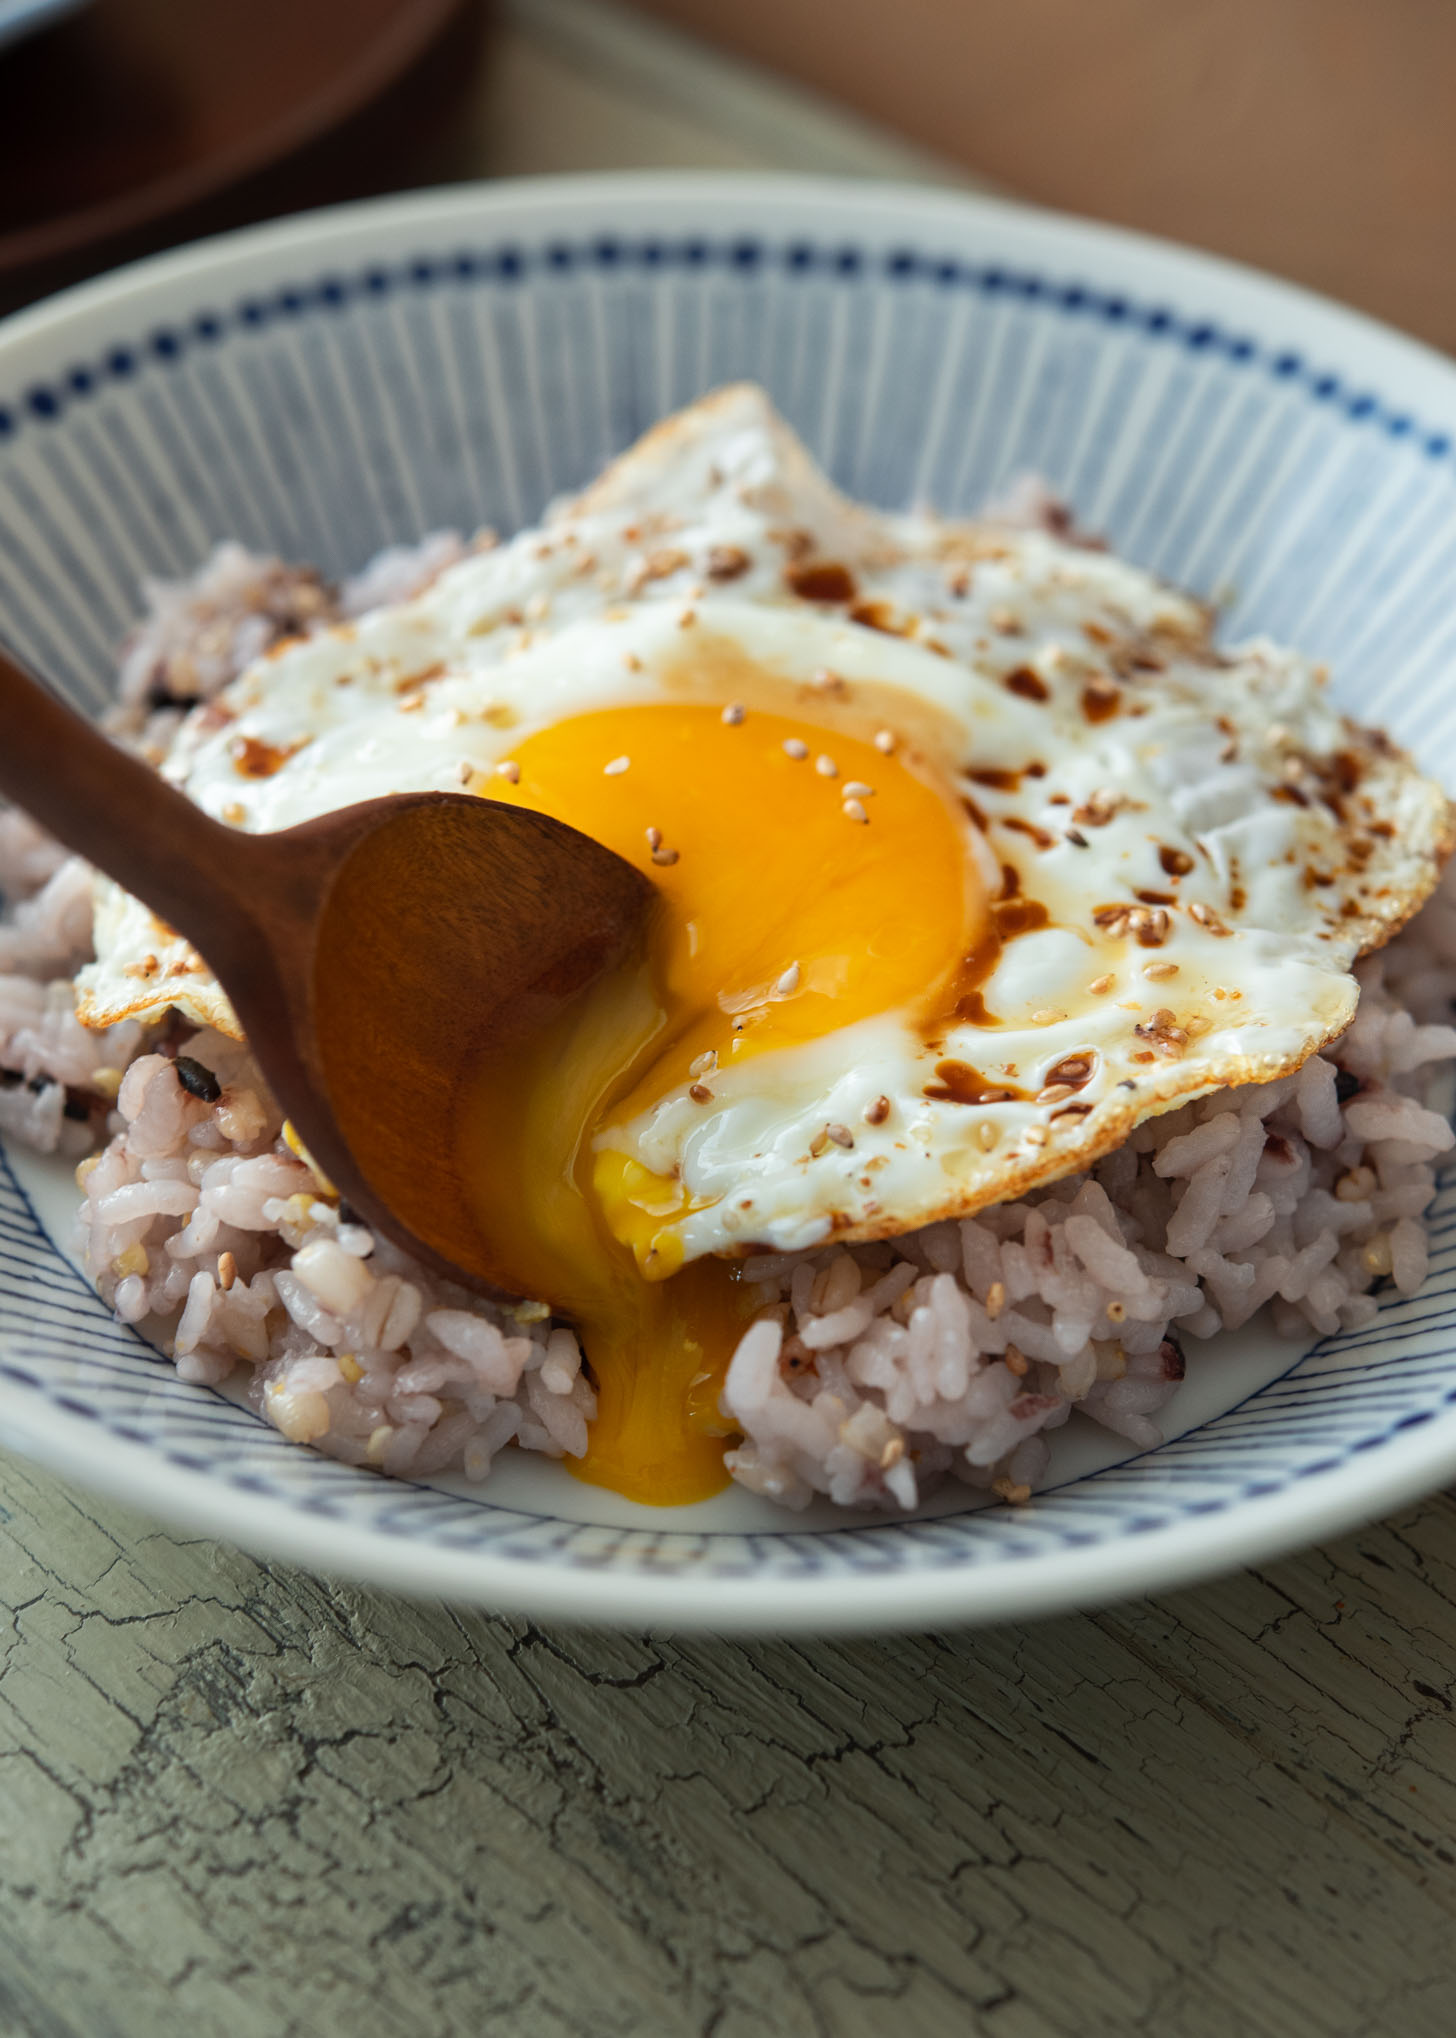 A spoon is breaking the egg yolk of gyeran bap (Korean rice and egg).